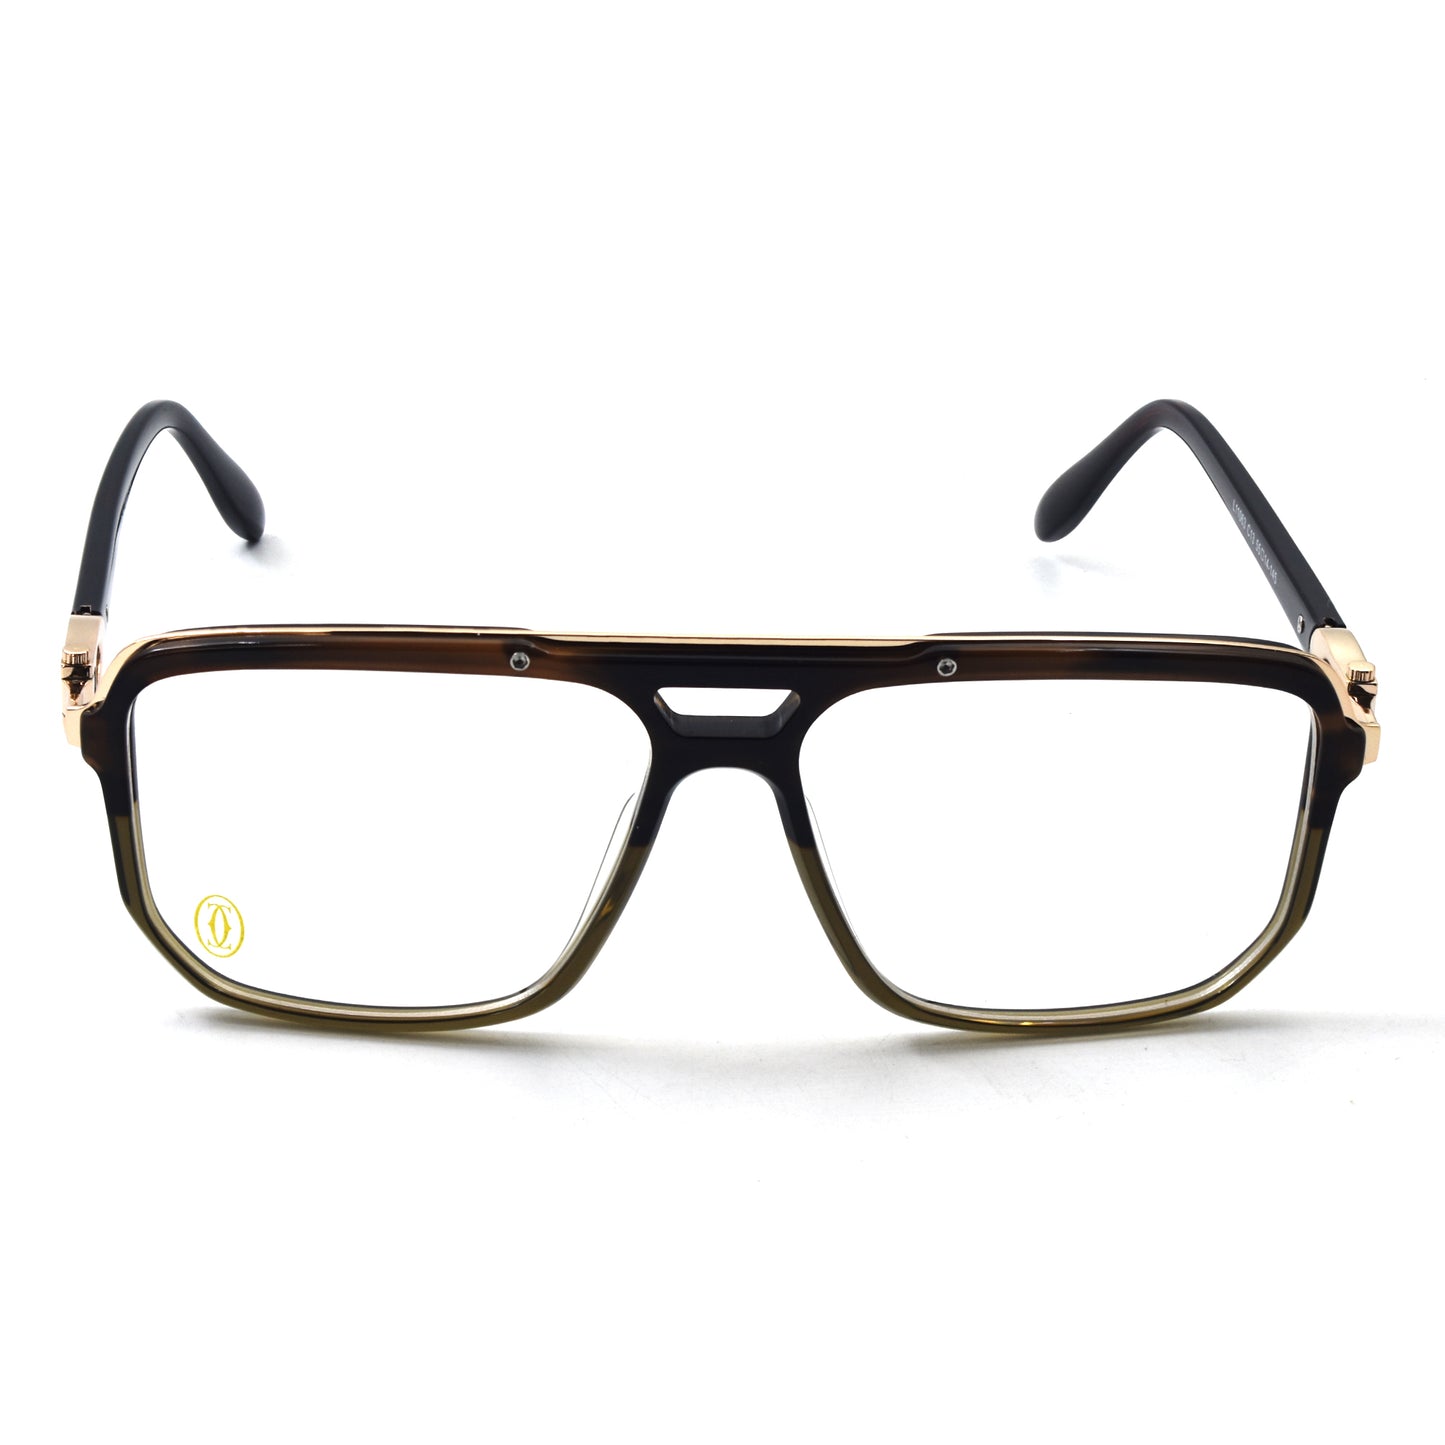 Luxury Stylish Eye Glass | CRTR Frame 27